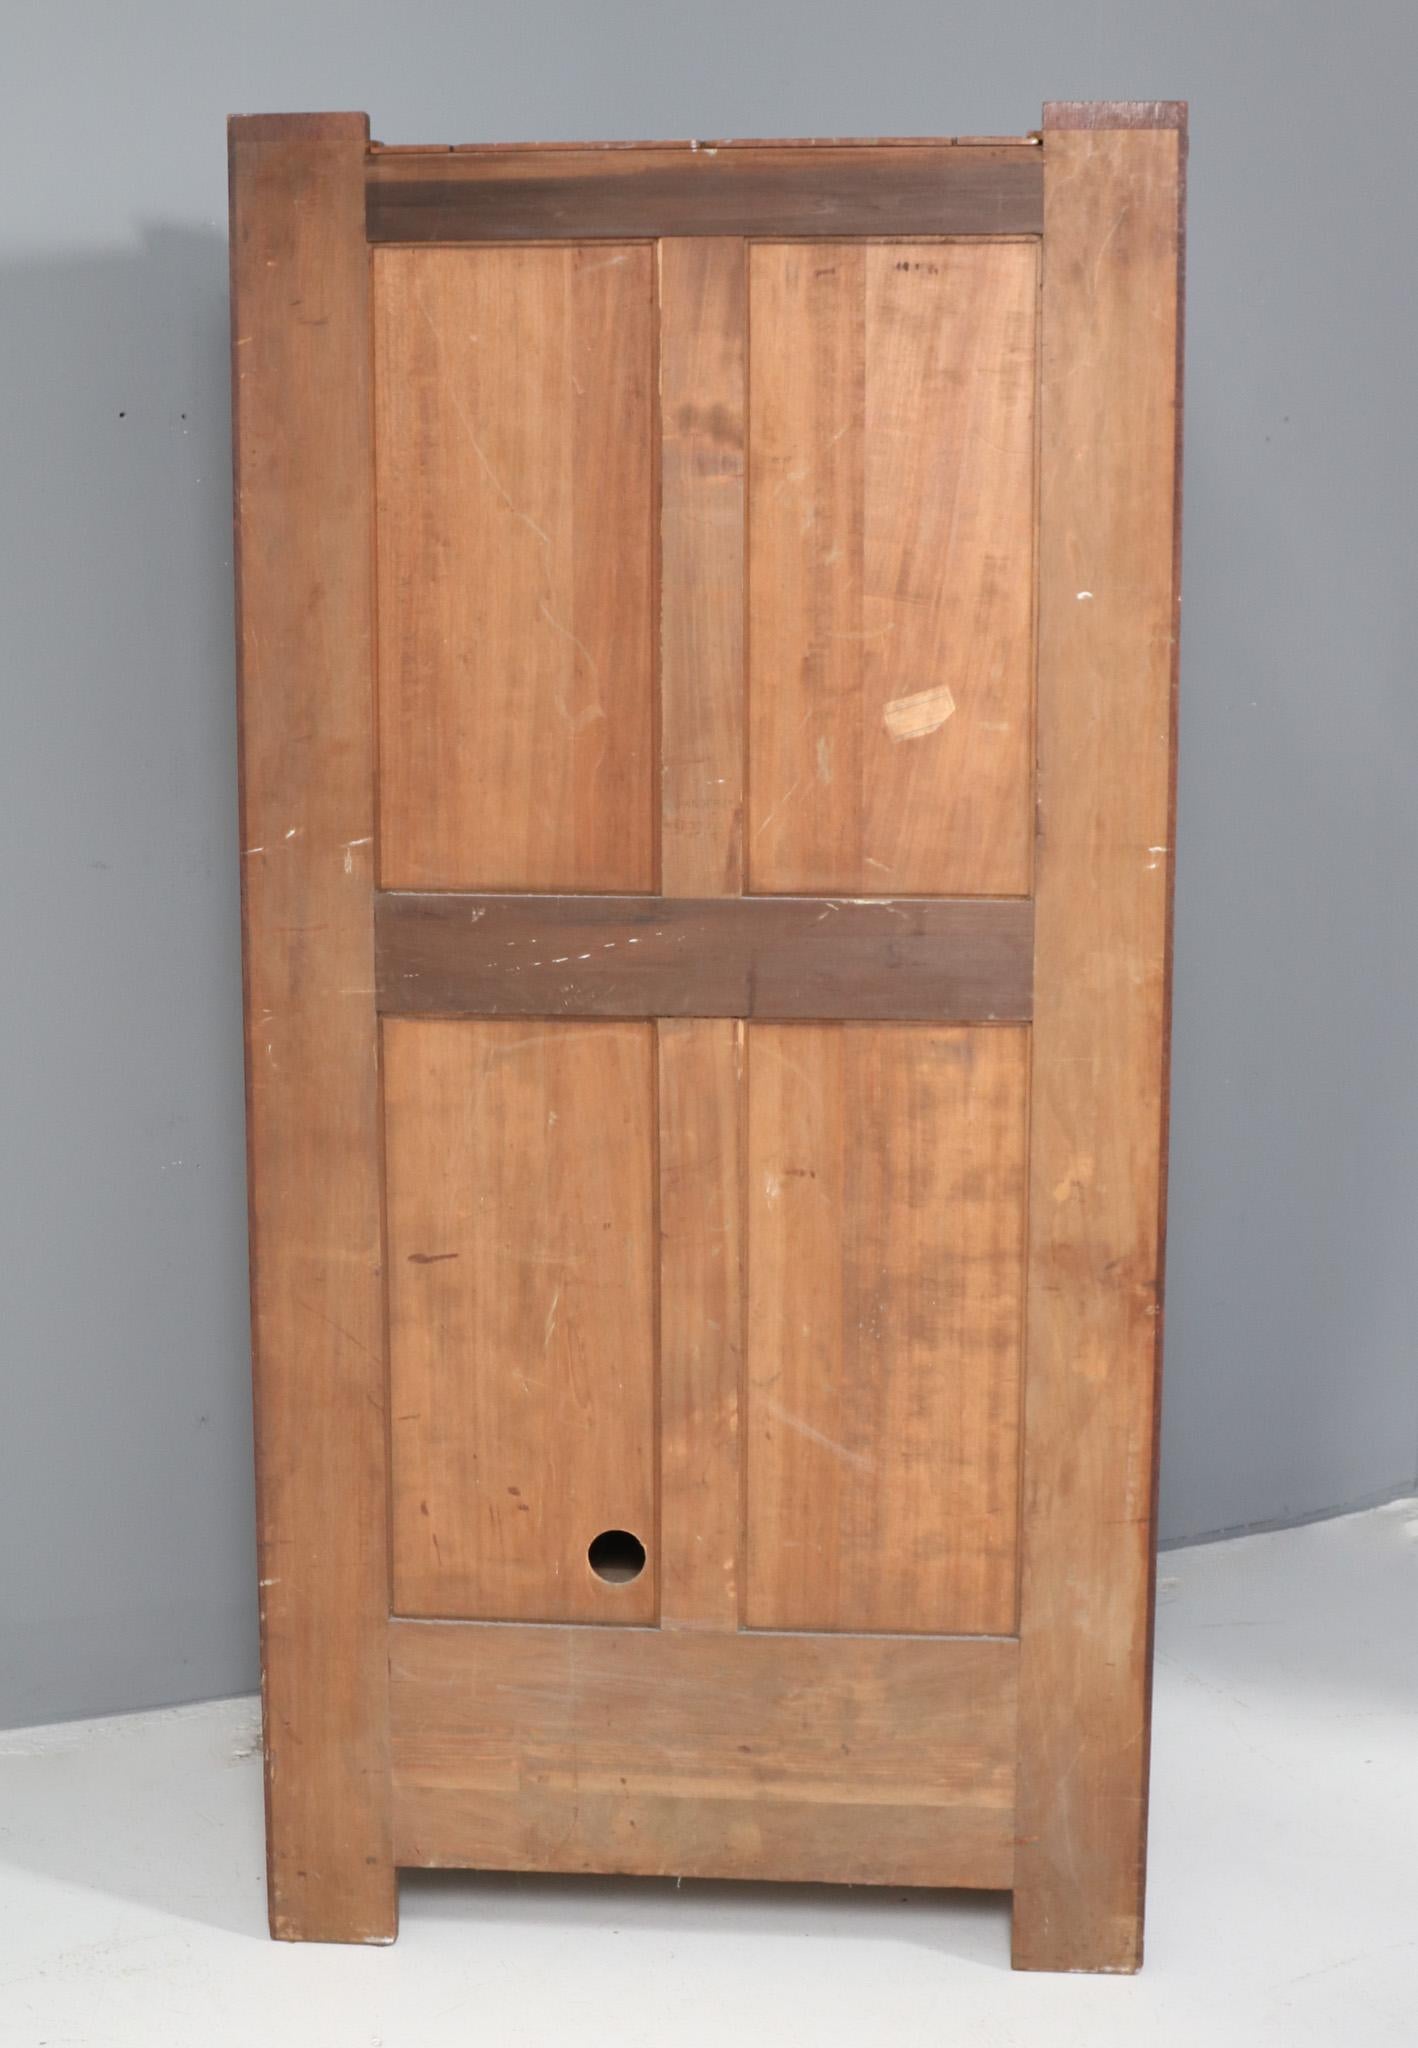  Art Deco Modernist Oak Armoire or Wardrobe by Hendrik Wouda for Pander, 1924 For Sale 3